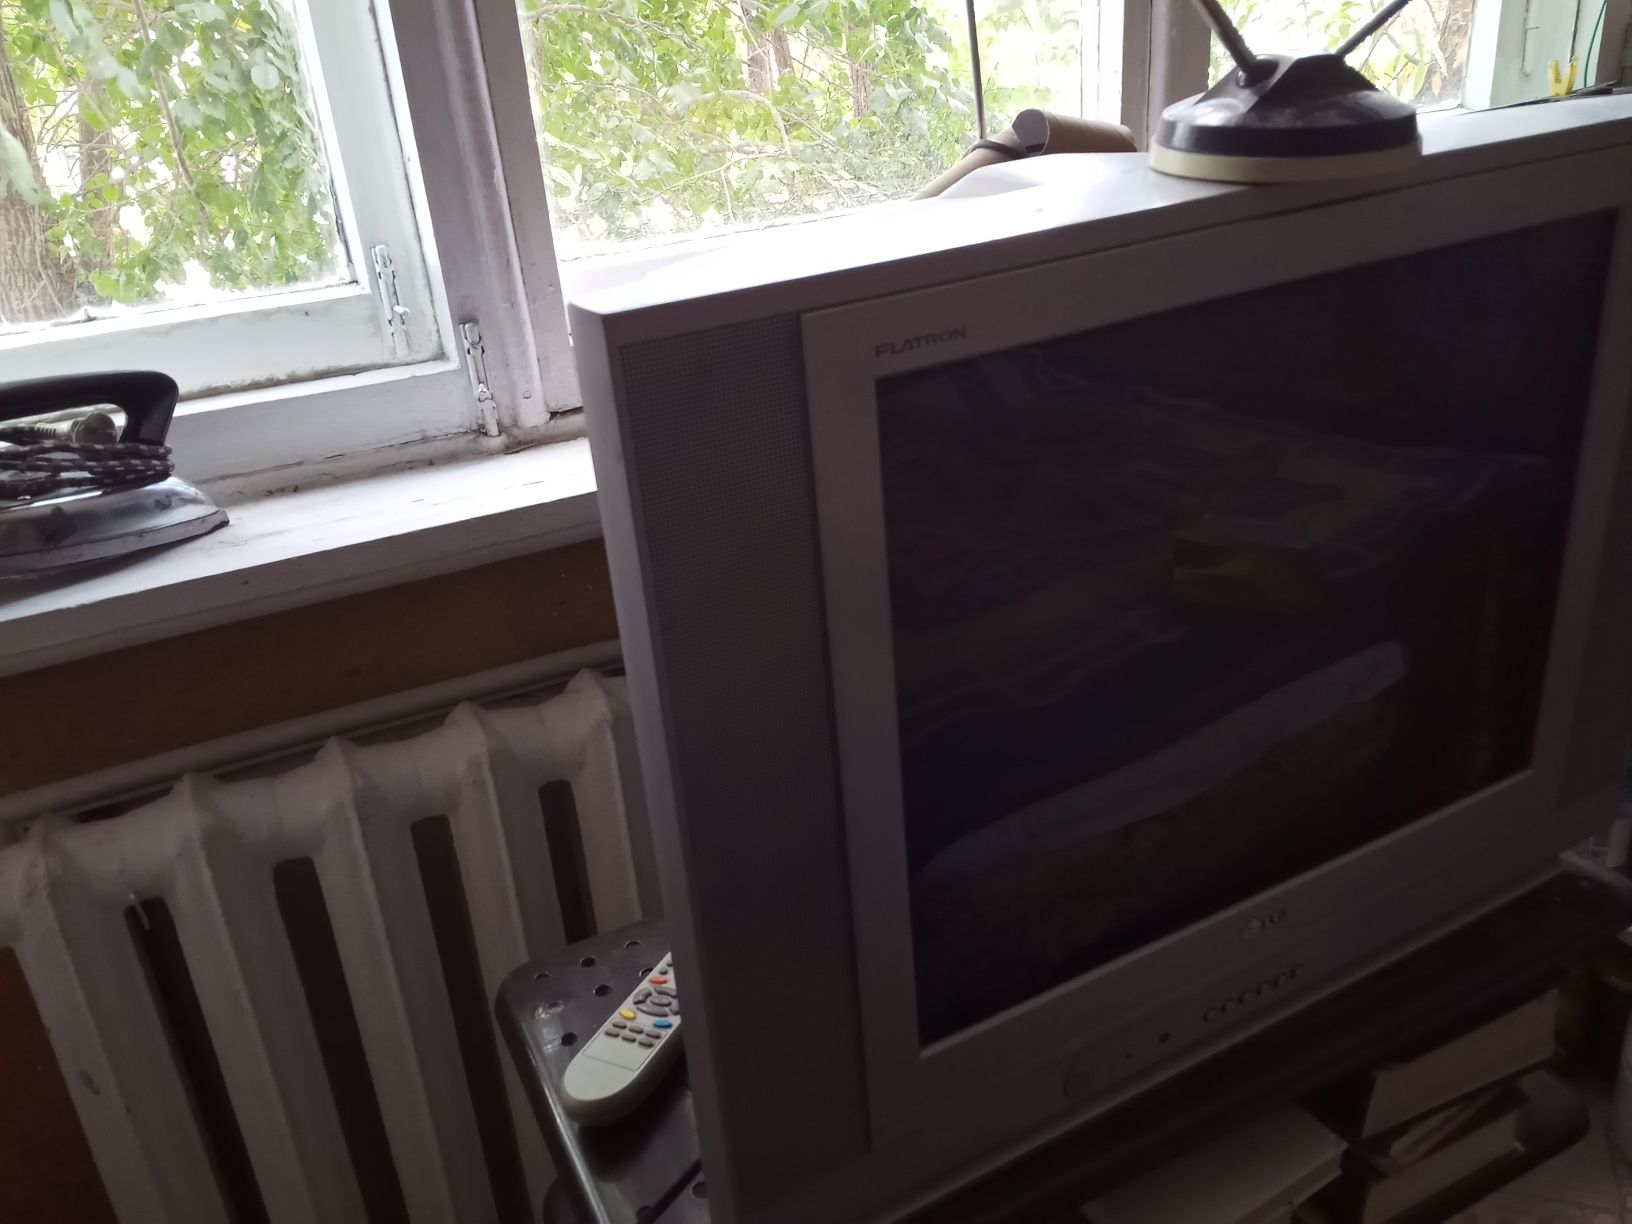 Телевизор LG - 19000тг  с приставкой